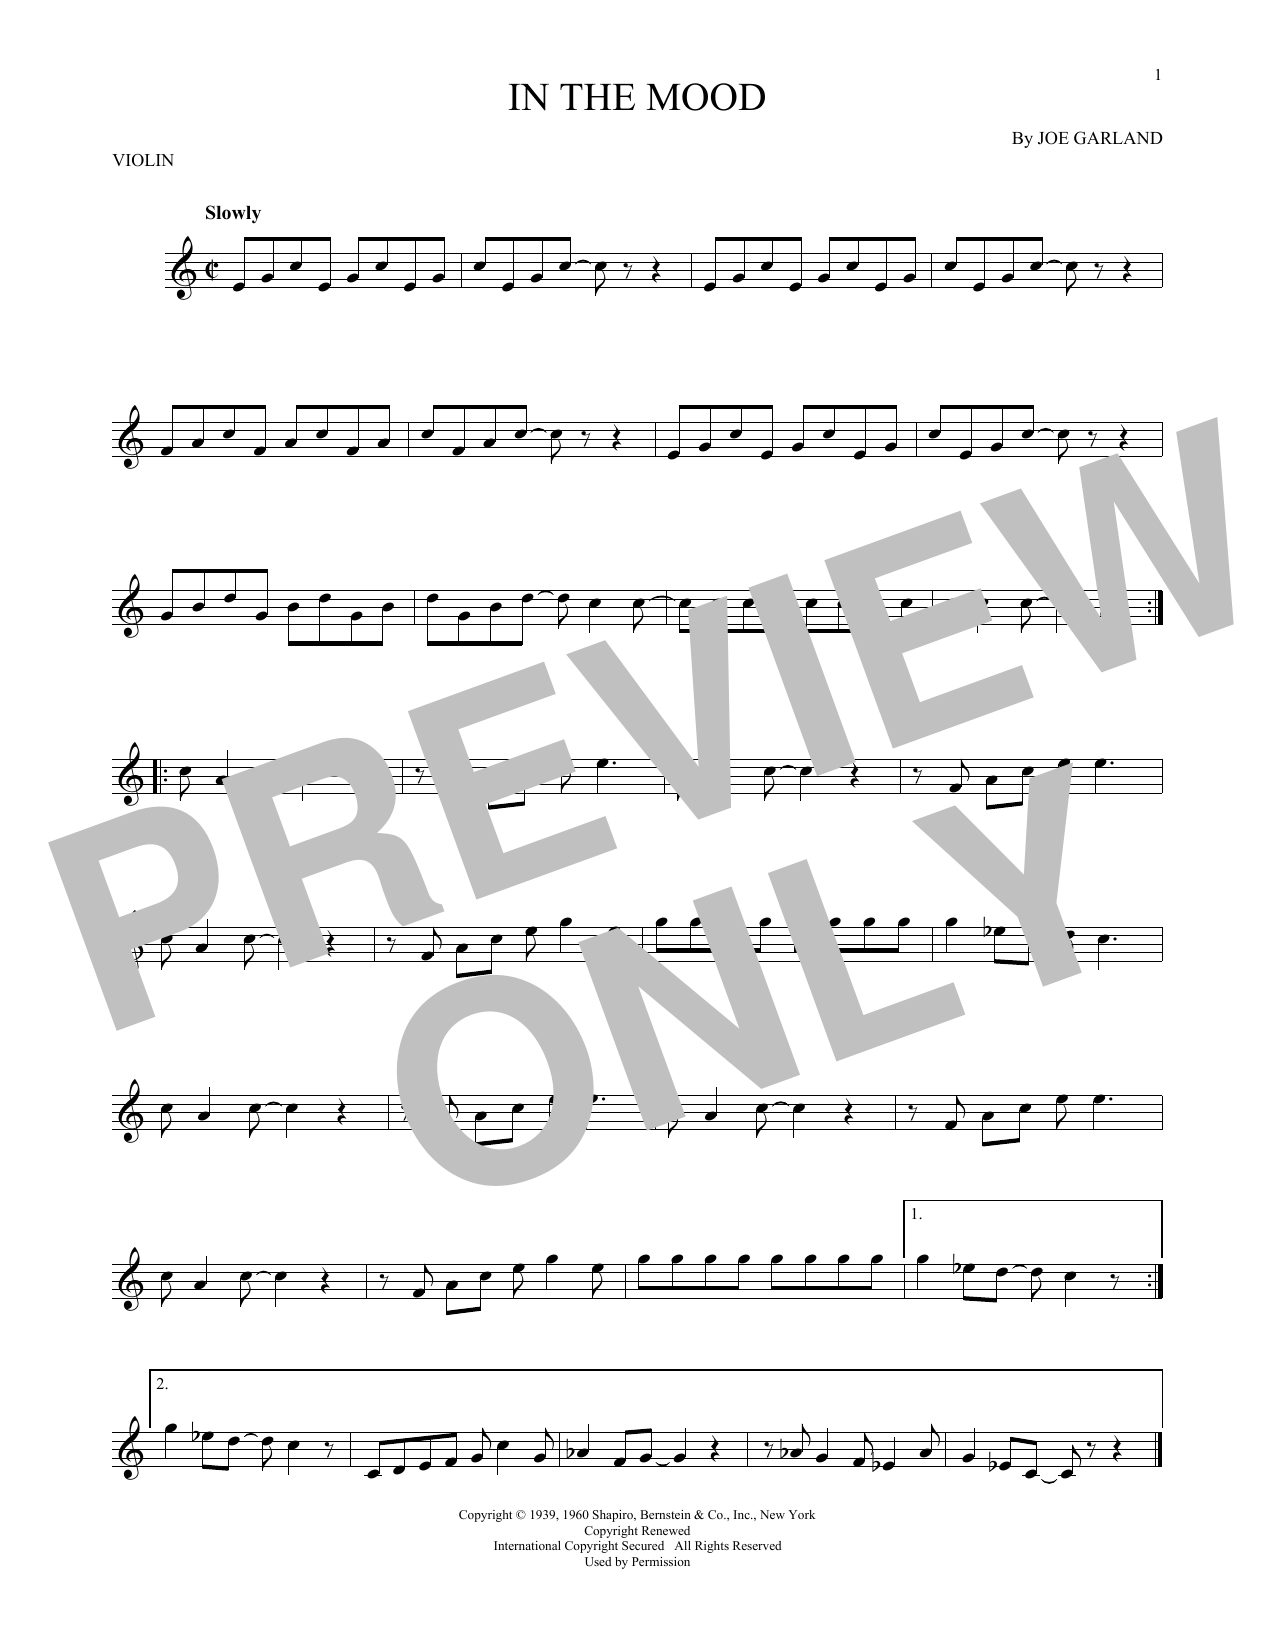 Joe Garland In The Mood Sheet Music Notes & Chords for Violin - Download or Print PDF